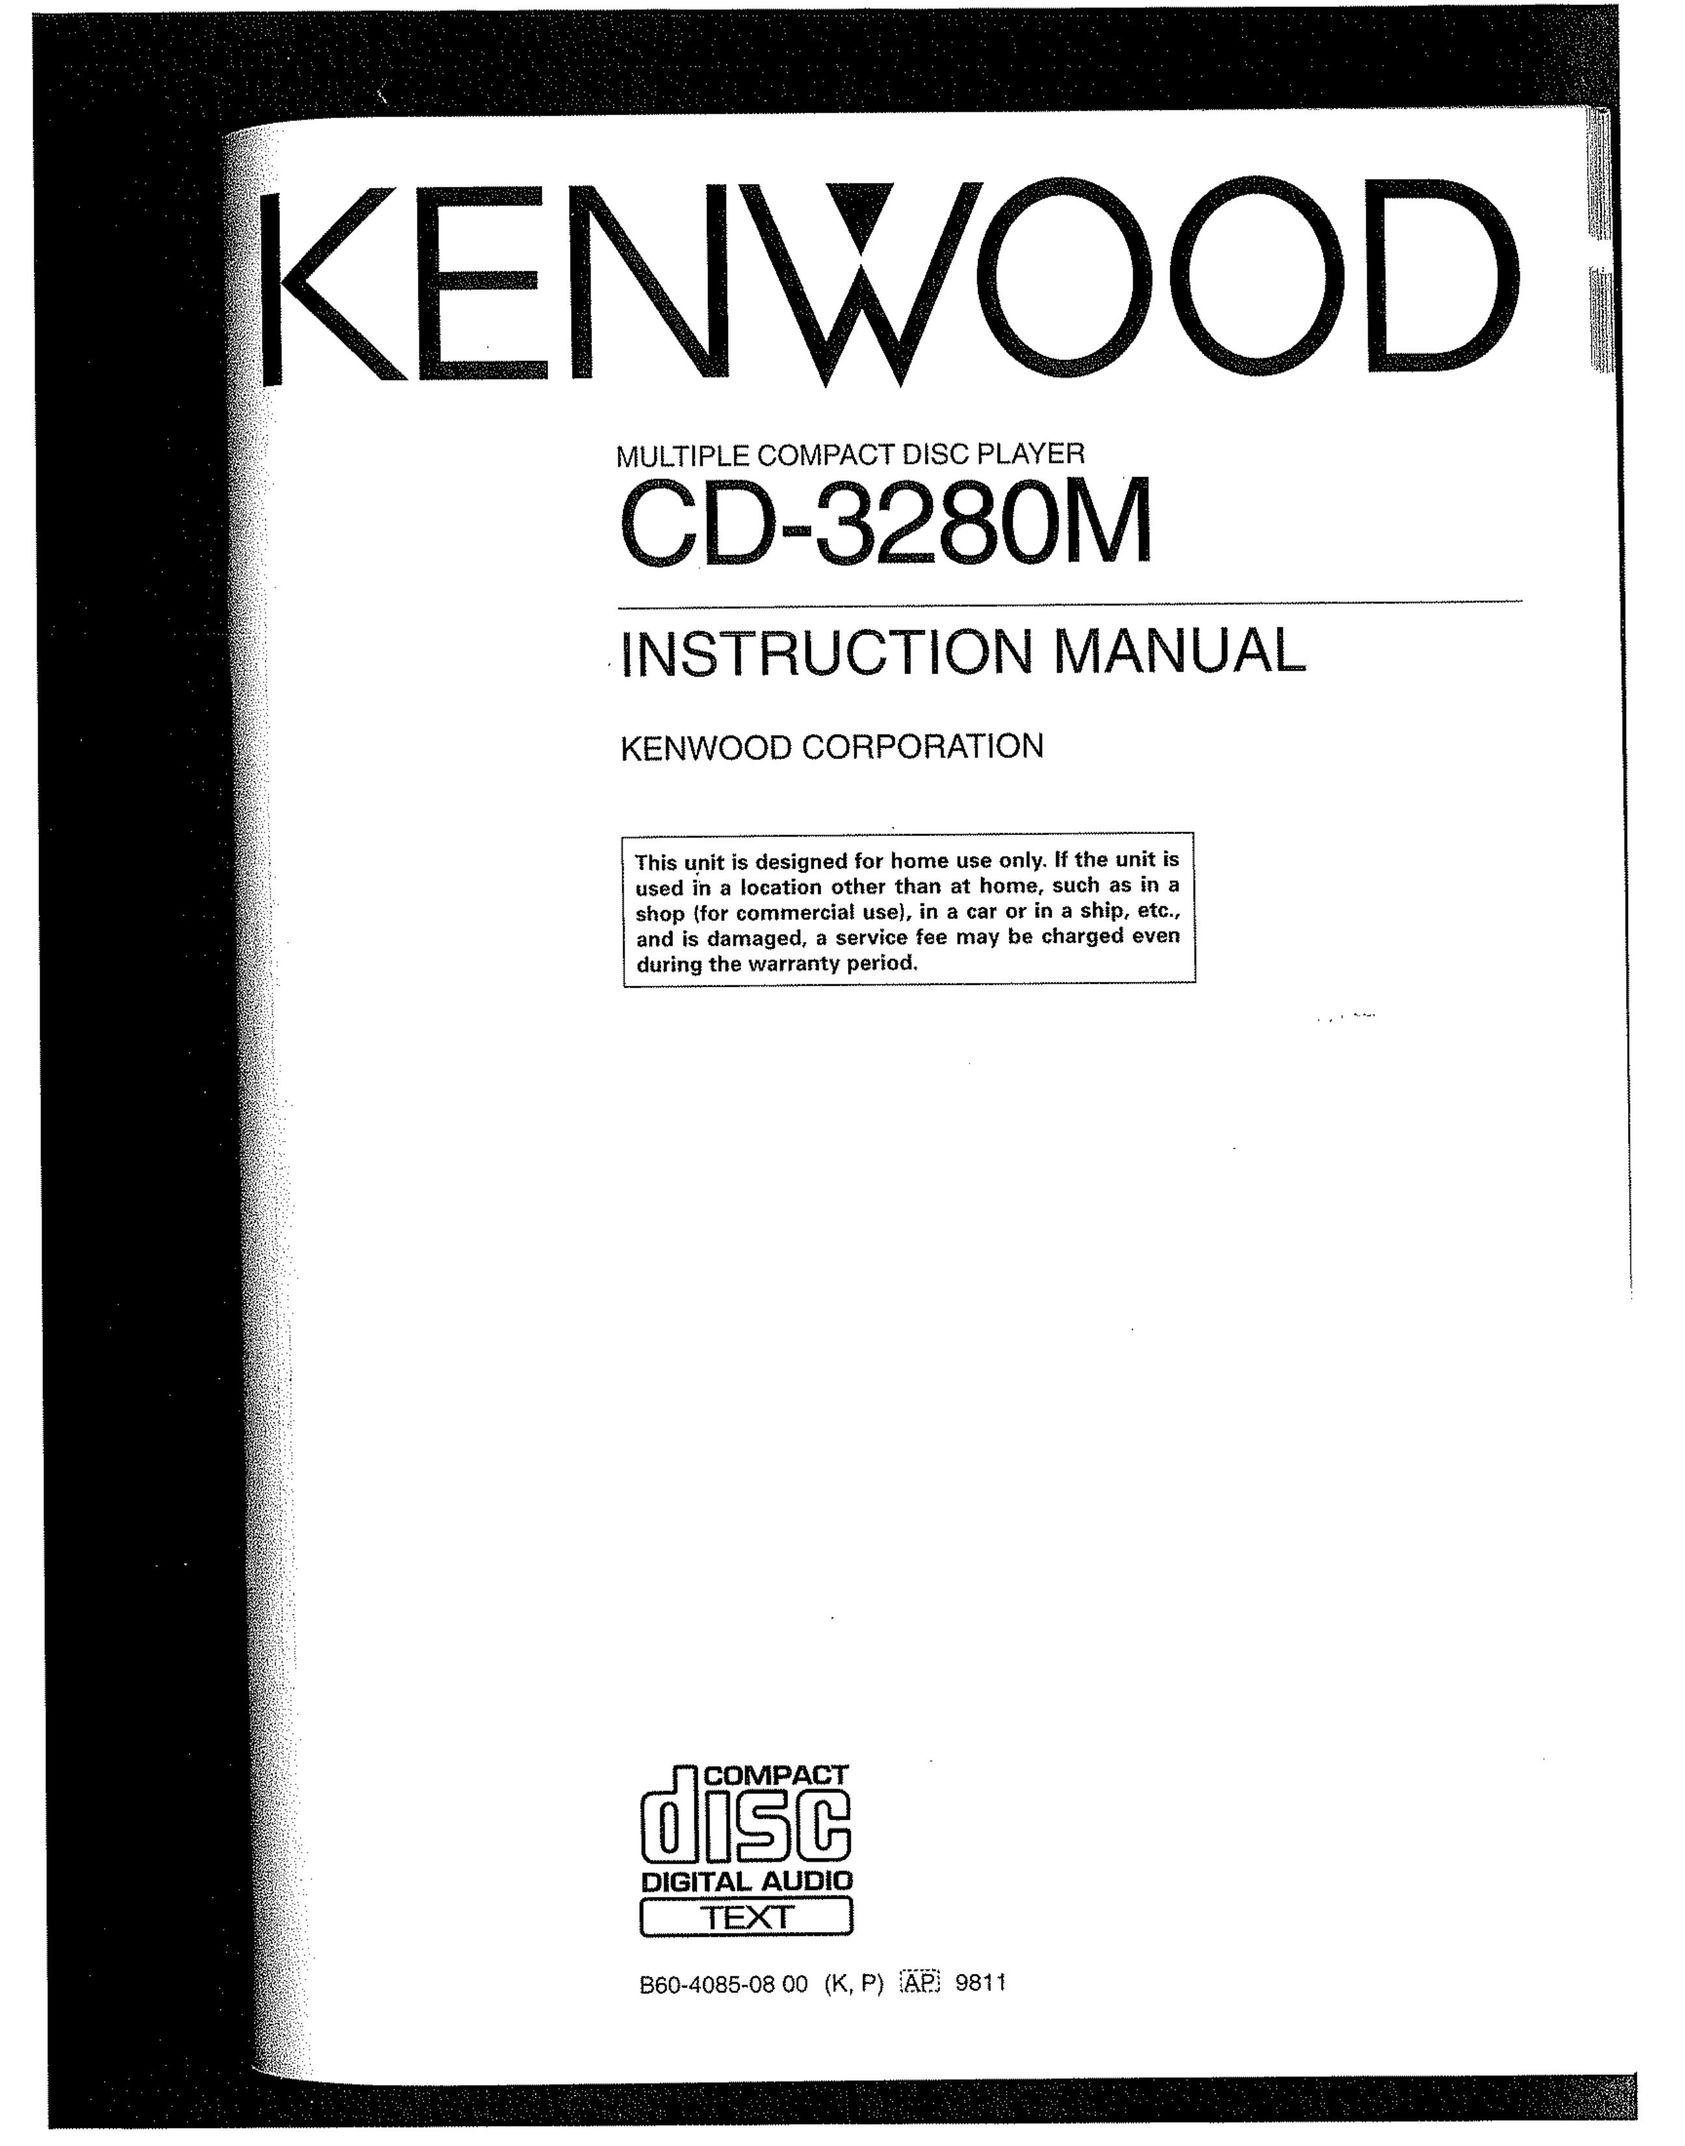 Kenwood CD-3280M CD Player User Manual